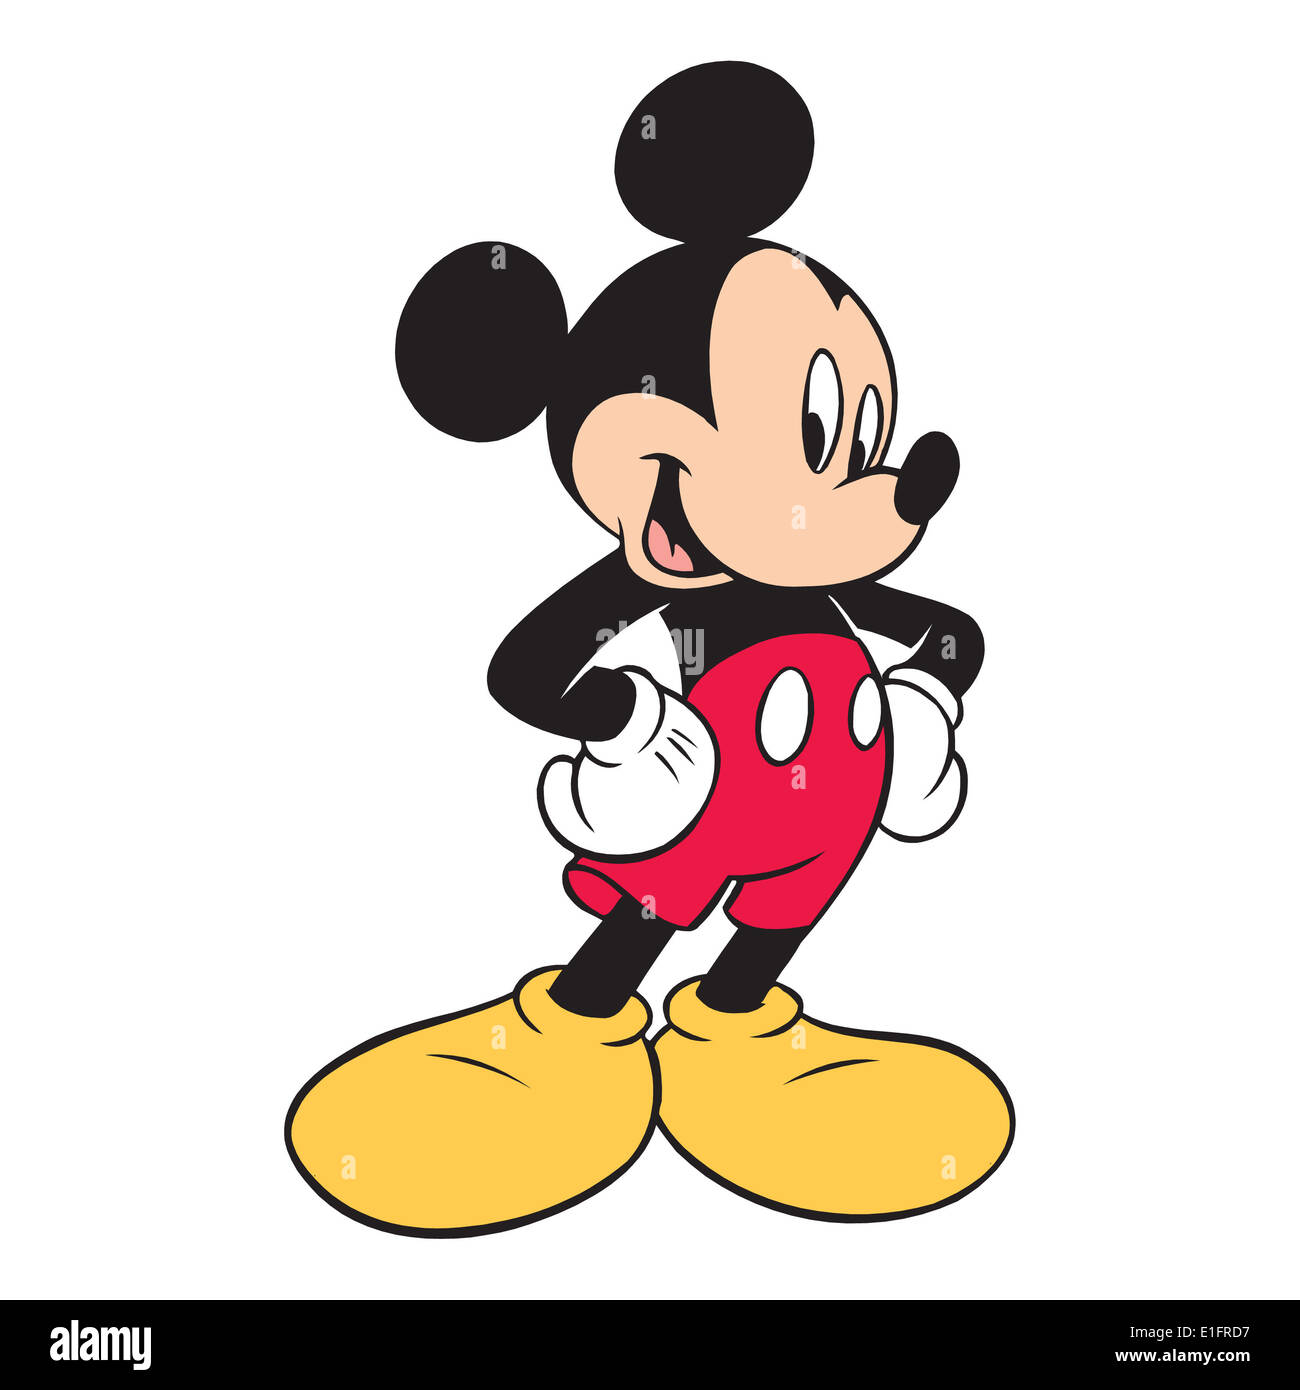 Mickey mouse Imágenes recortadas de stock - Alamy